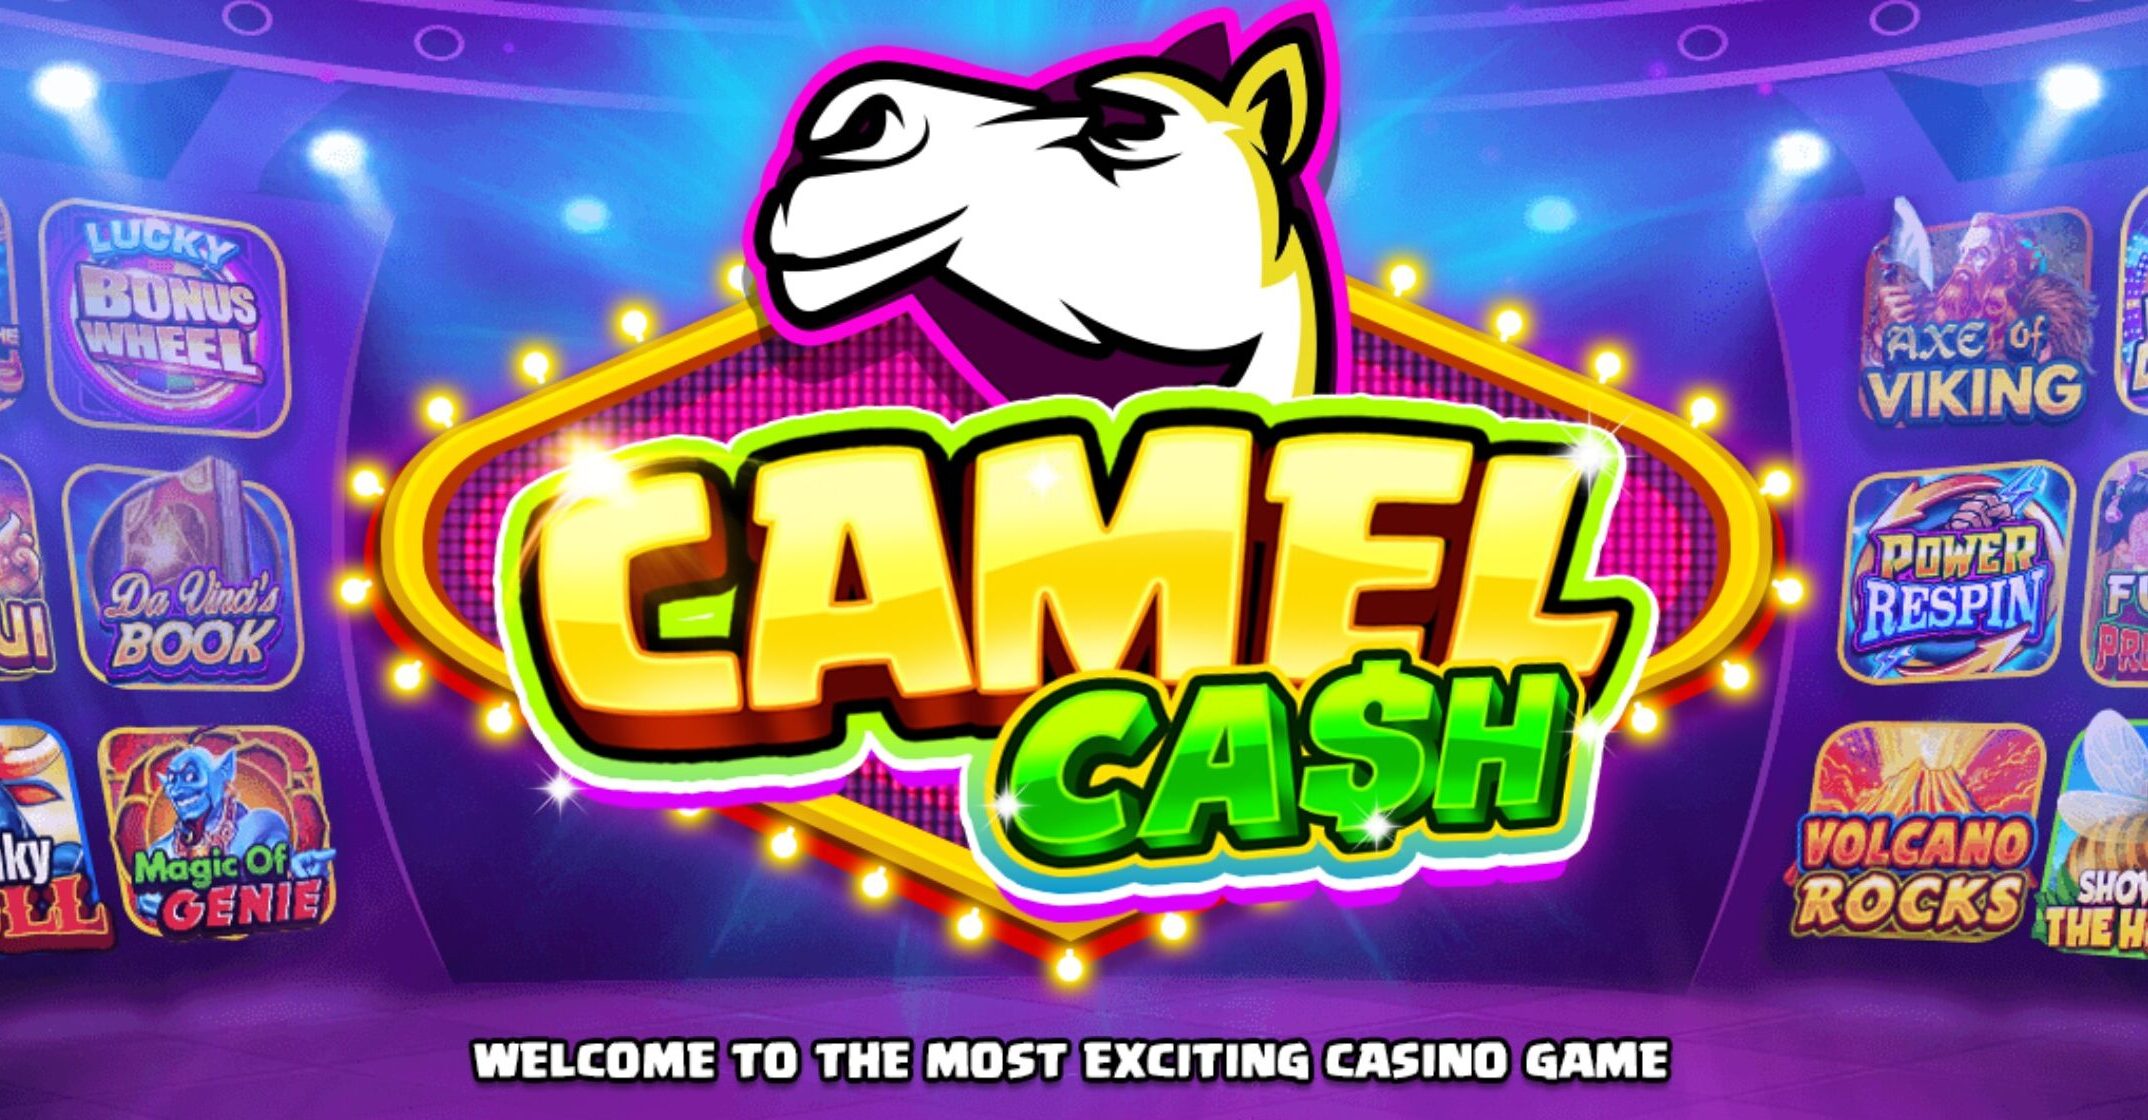 Exciting Slot Machines at Camel Cash Casino